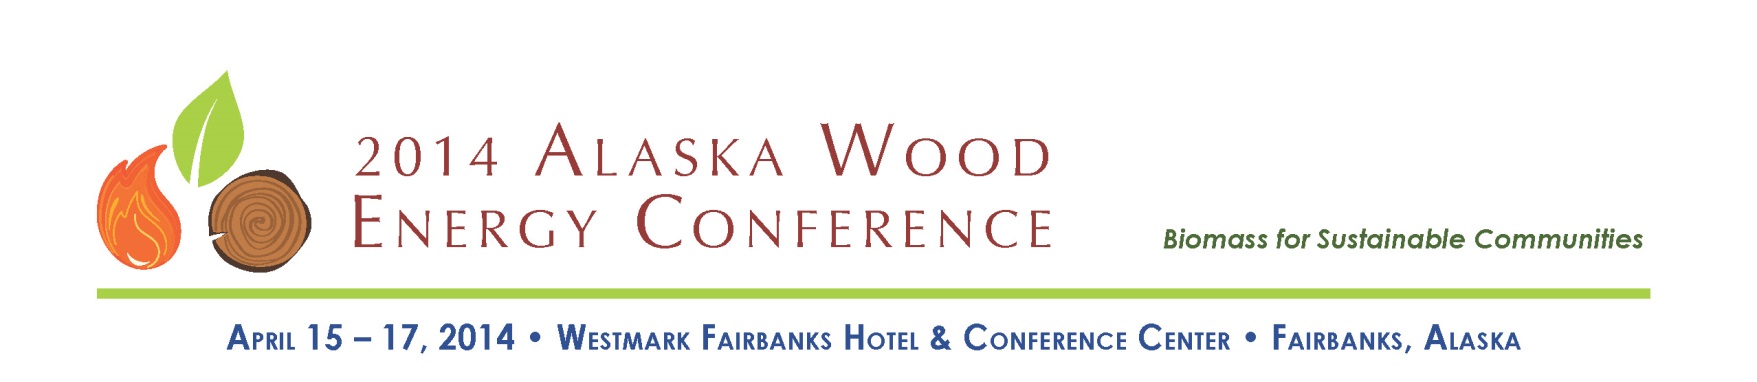 Soft Registration Deadline for the 2014 Alaska Wood Energy Conference is Friday, April 11th